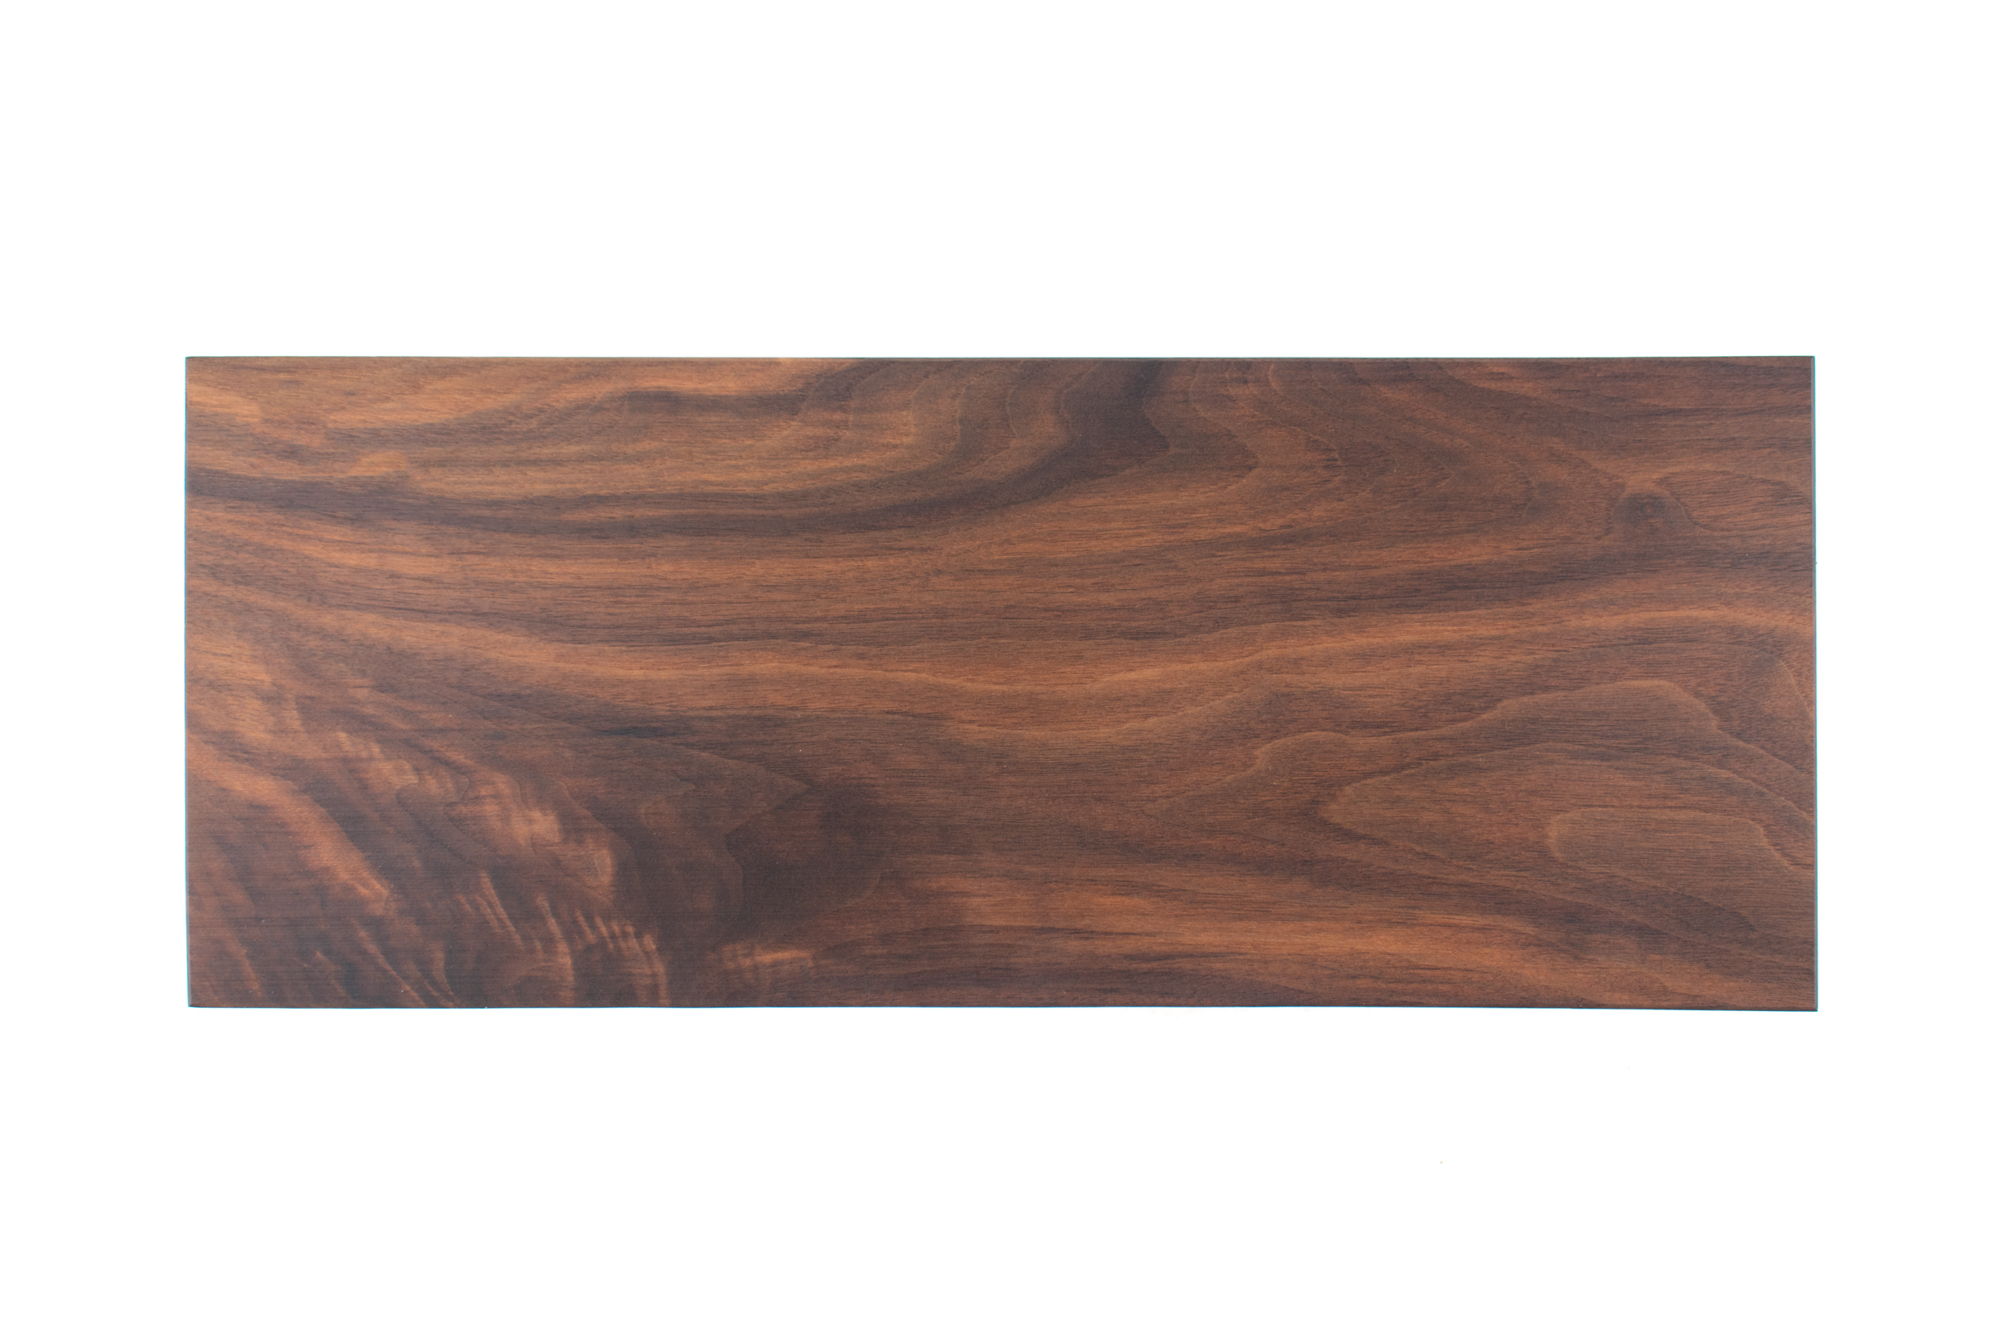 Walnut wood charcuterie board butcher board style 1 ¾” thick 